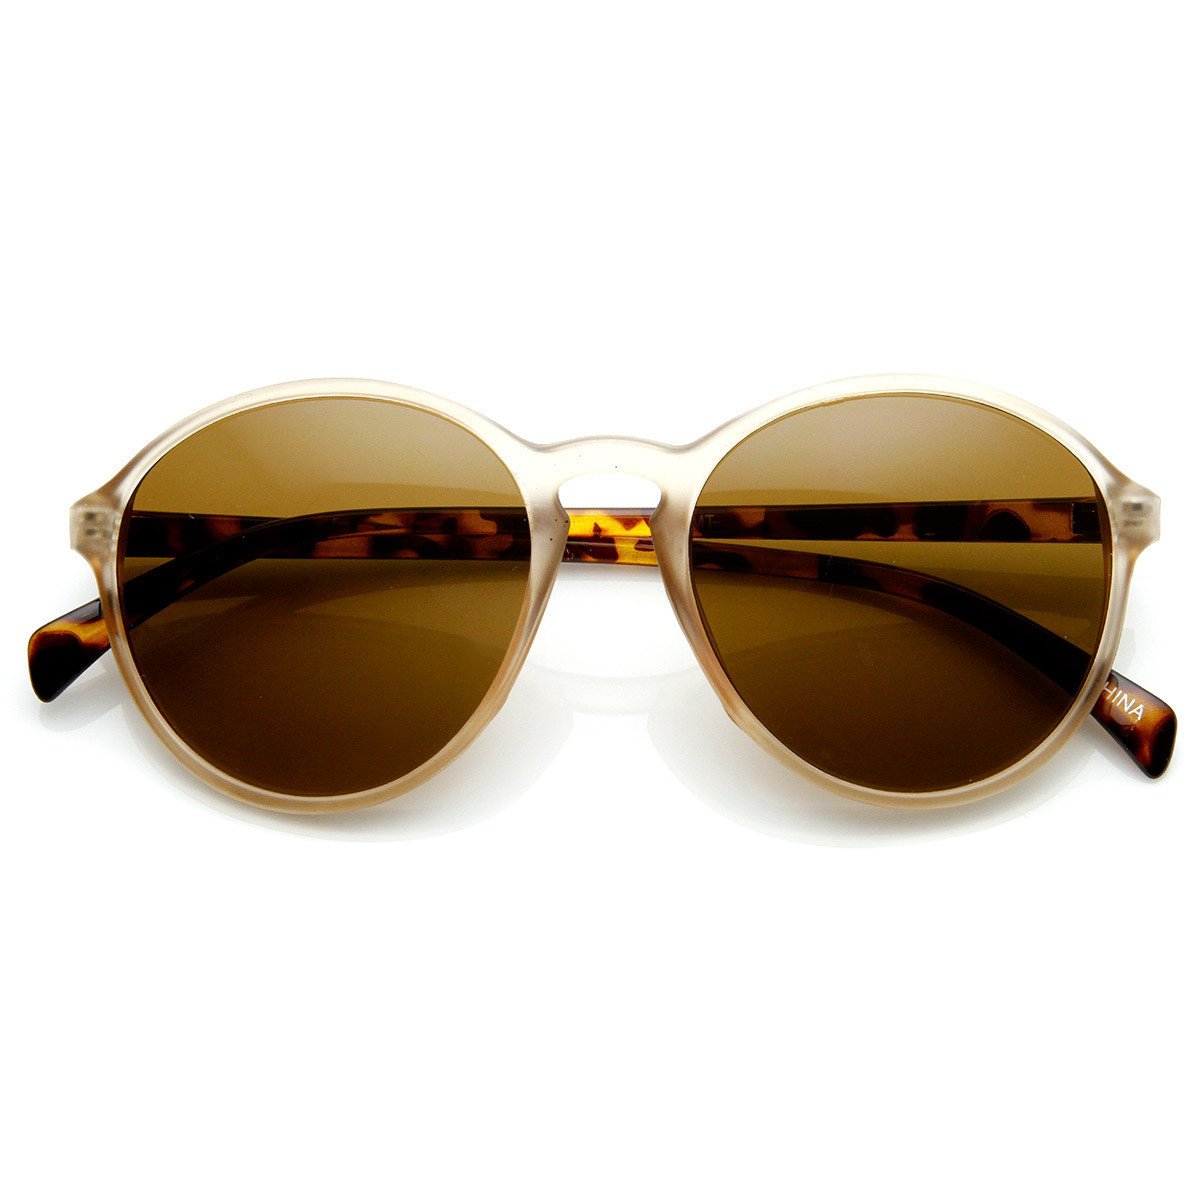 Matte Finish Retro Keyhole Bridge P3 Frame Round Sunglasses - 9178 - Yellow Green